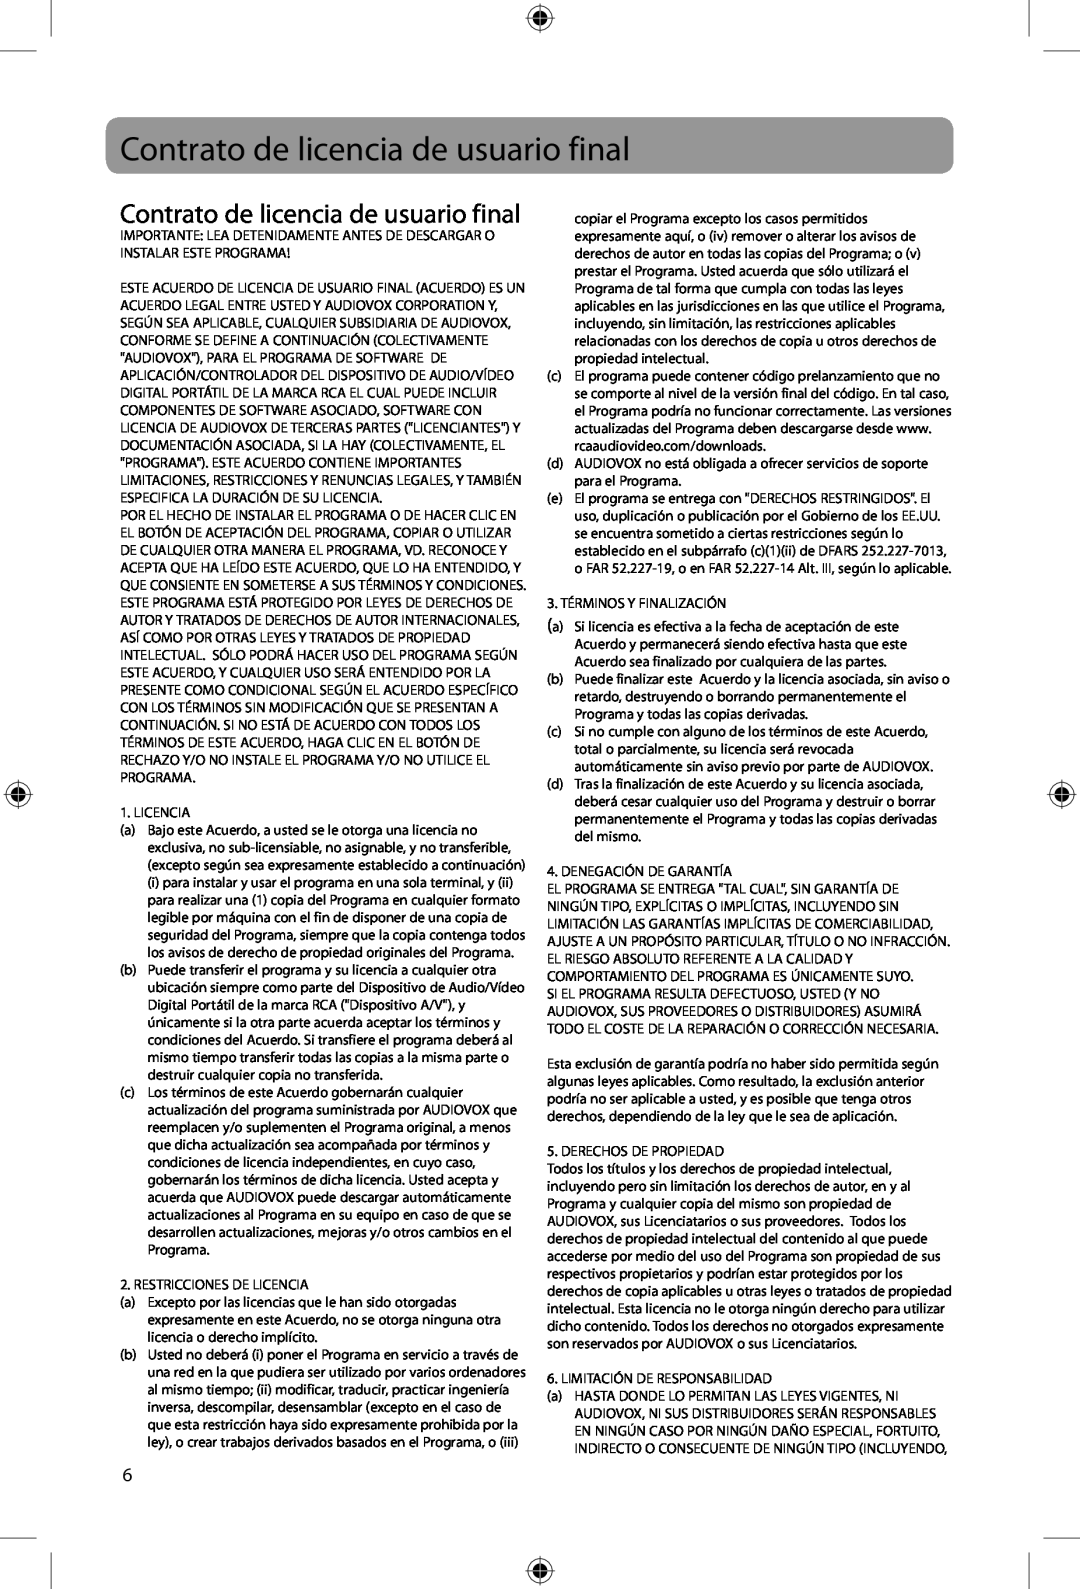 Acoustic Research ARIR200 user manual Contrato de licencia de usuario final 